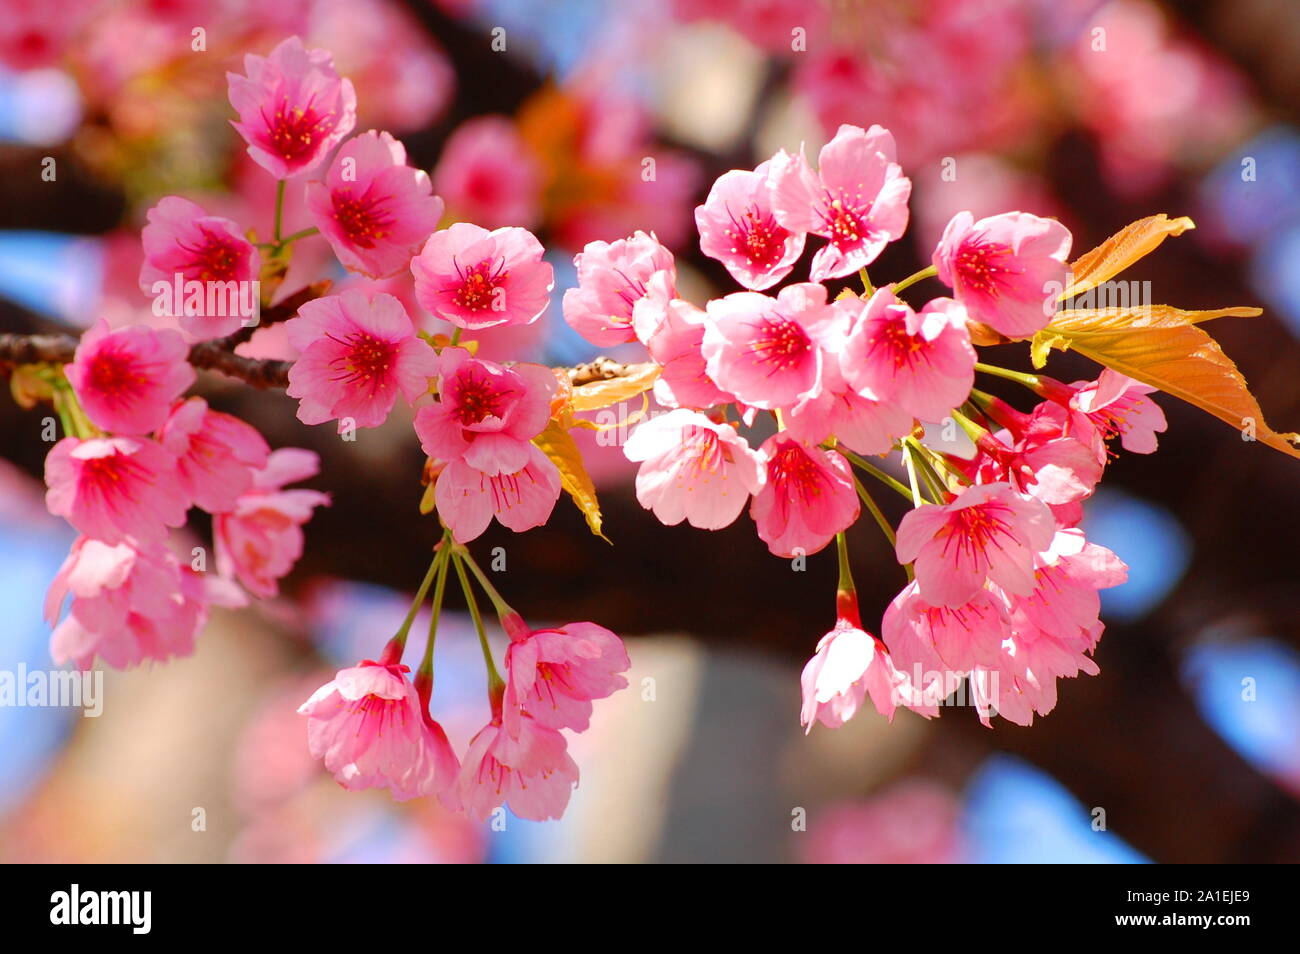 Pink Cherry Blossom temporada de primavera en Japón hermosa naturaleza flores disparar cerca con fondo desenfocado Foto de stock